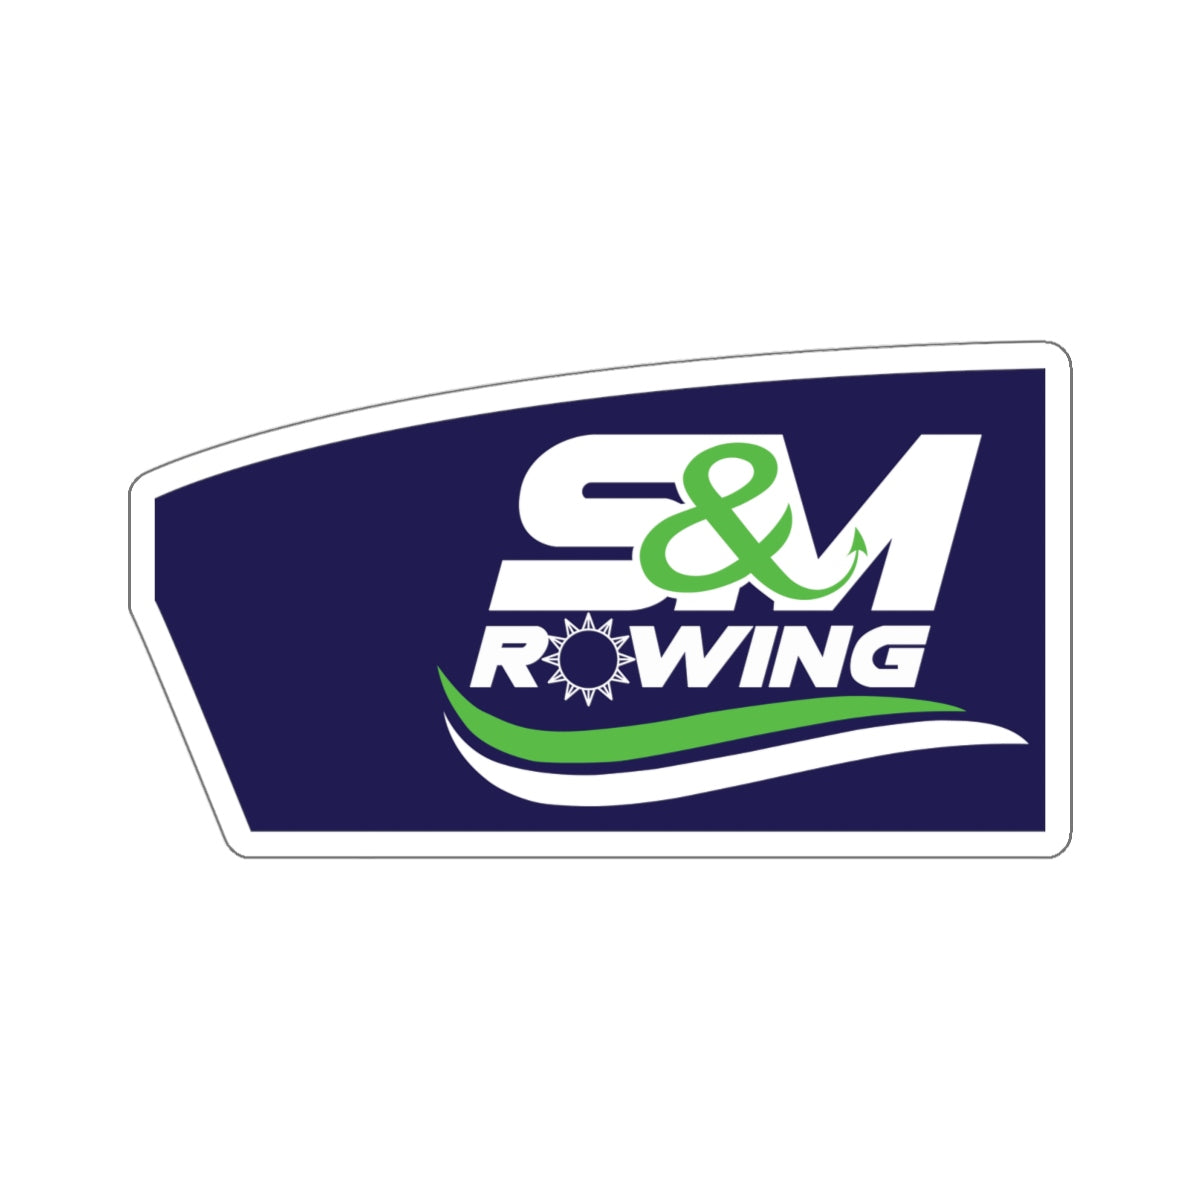 S _ M Rowing Sticker